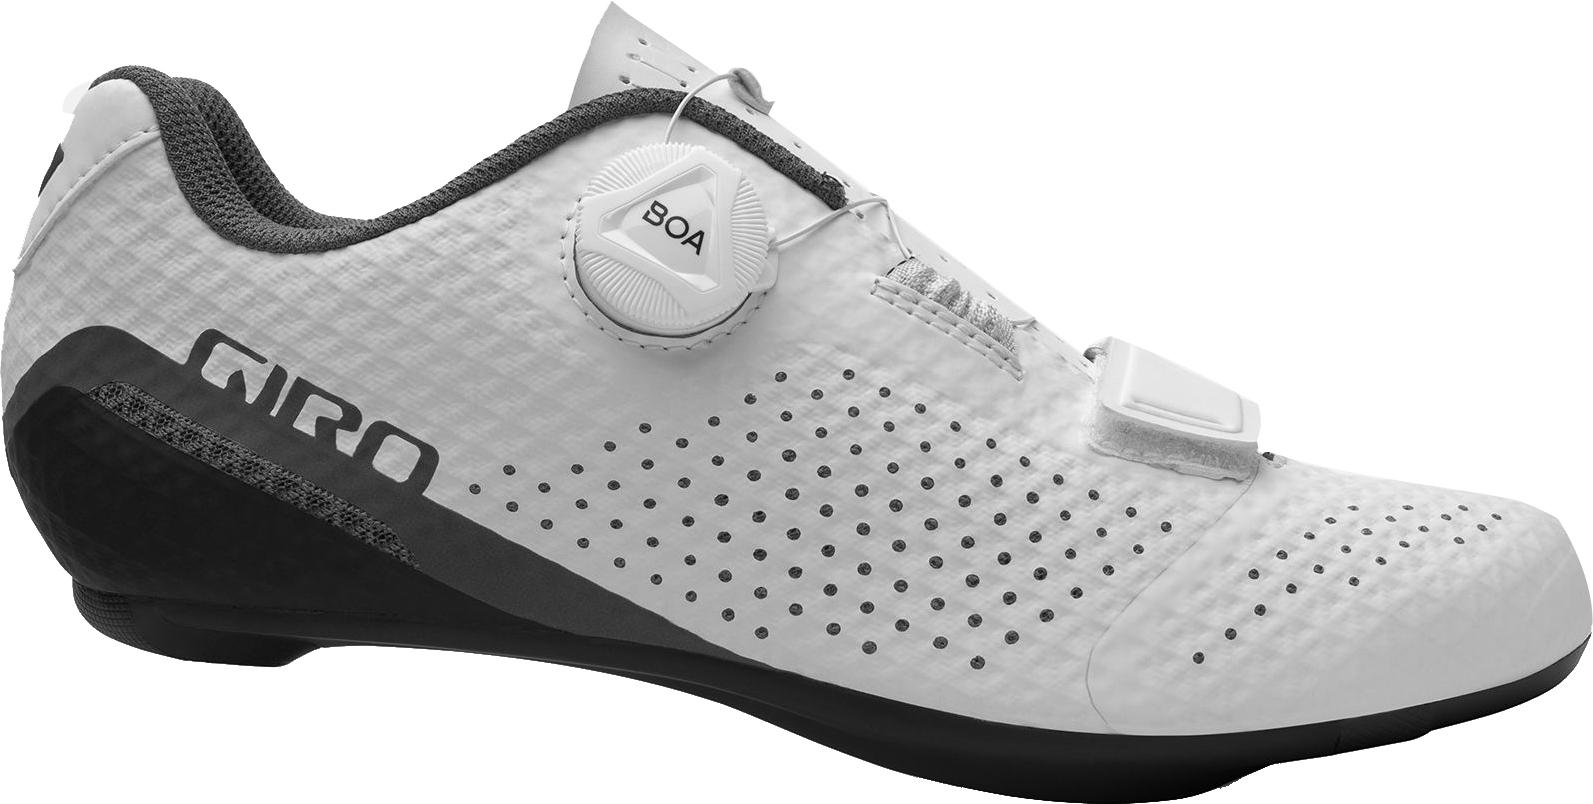 Giro Womens Cadet Road Shoes  White